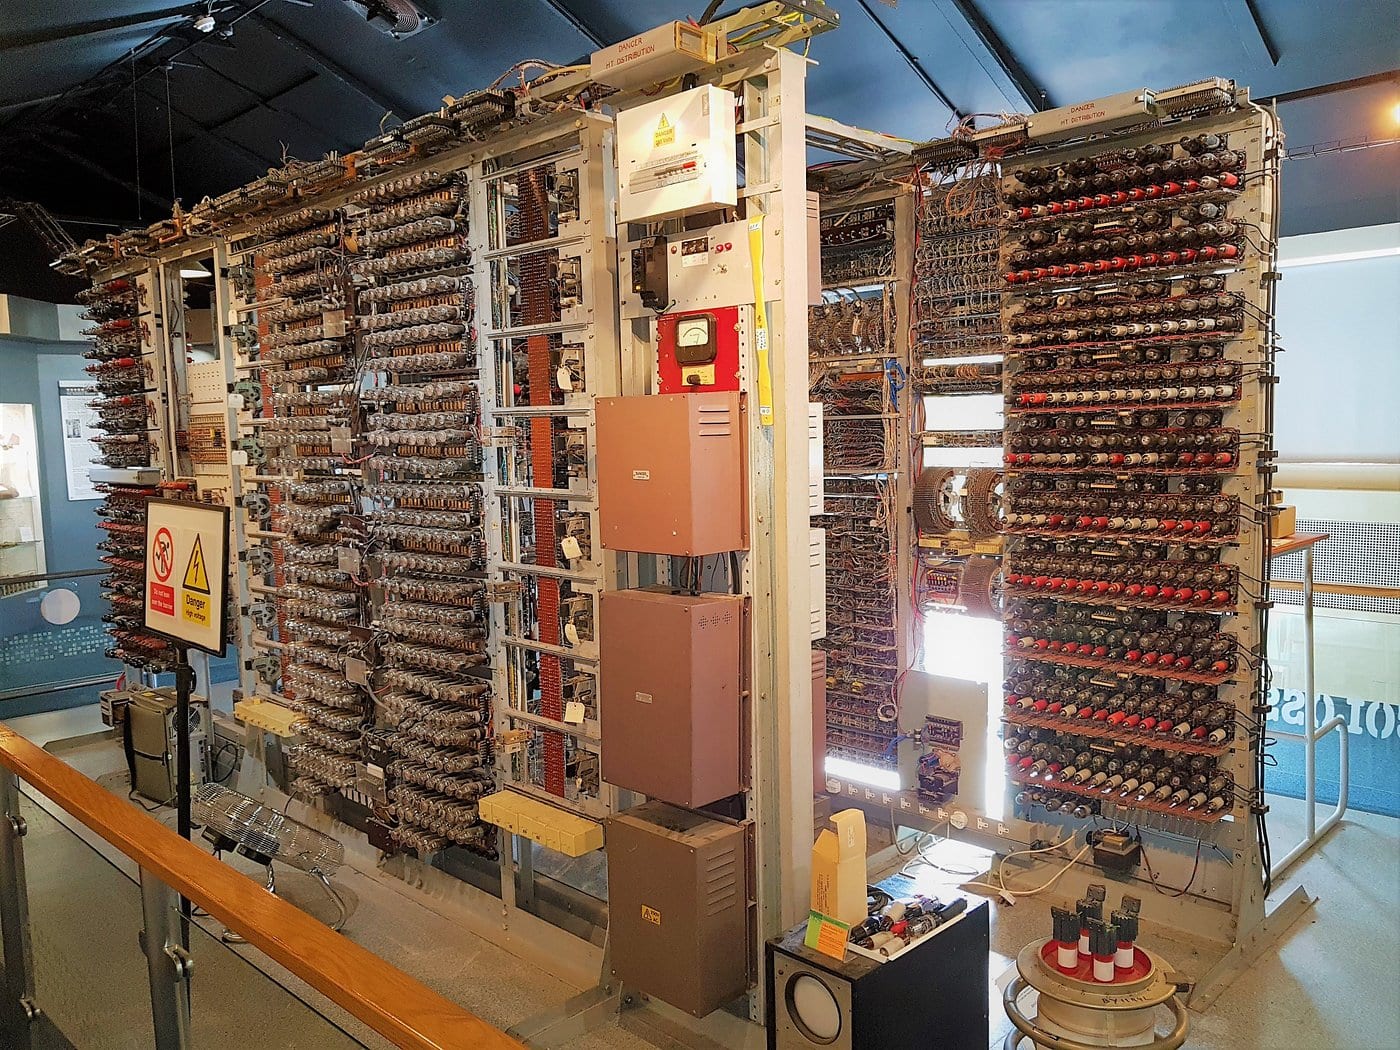 National museum of Computing